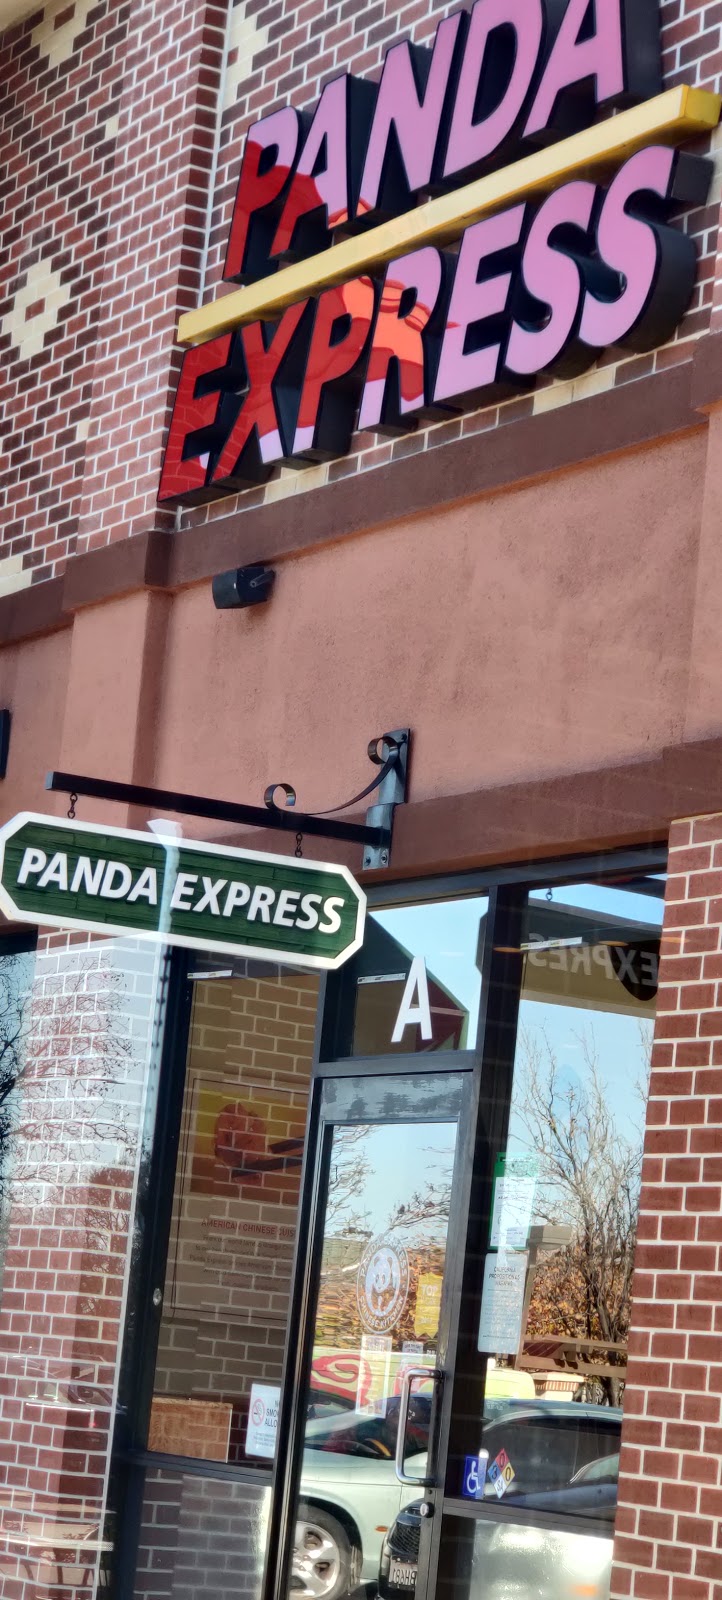 Panda Express | 2100-a, Portola Ave, Livermore, CA 94550 | Phone: (925) 961-0168